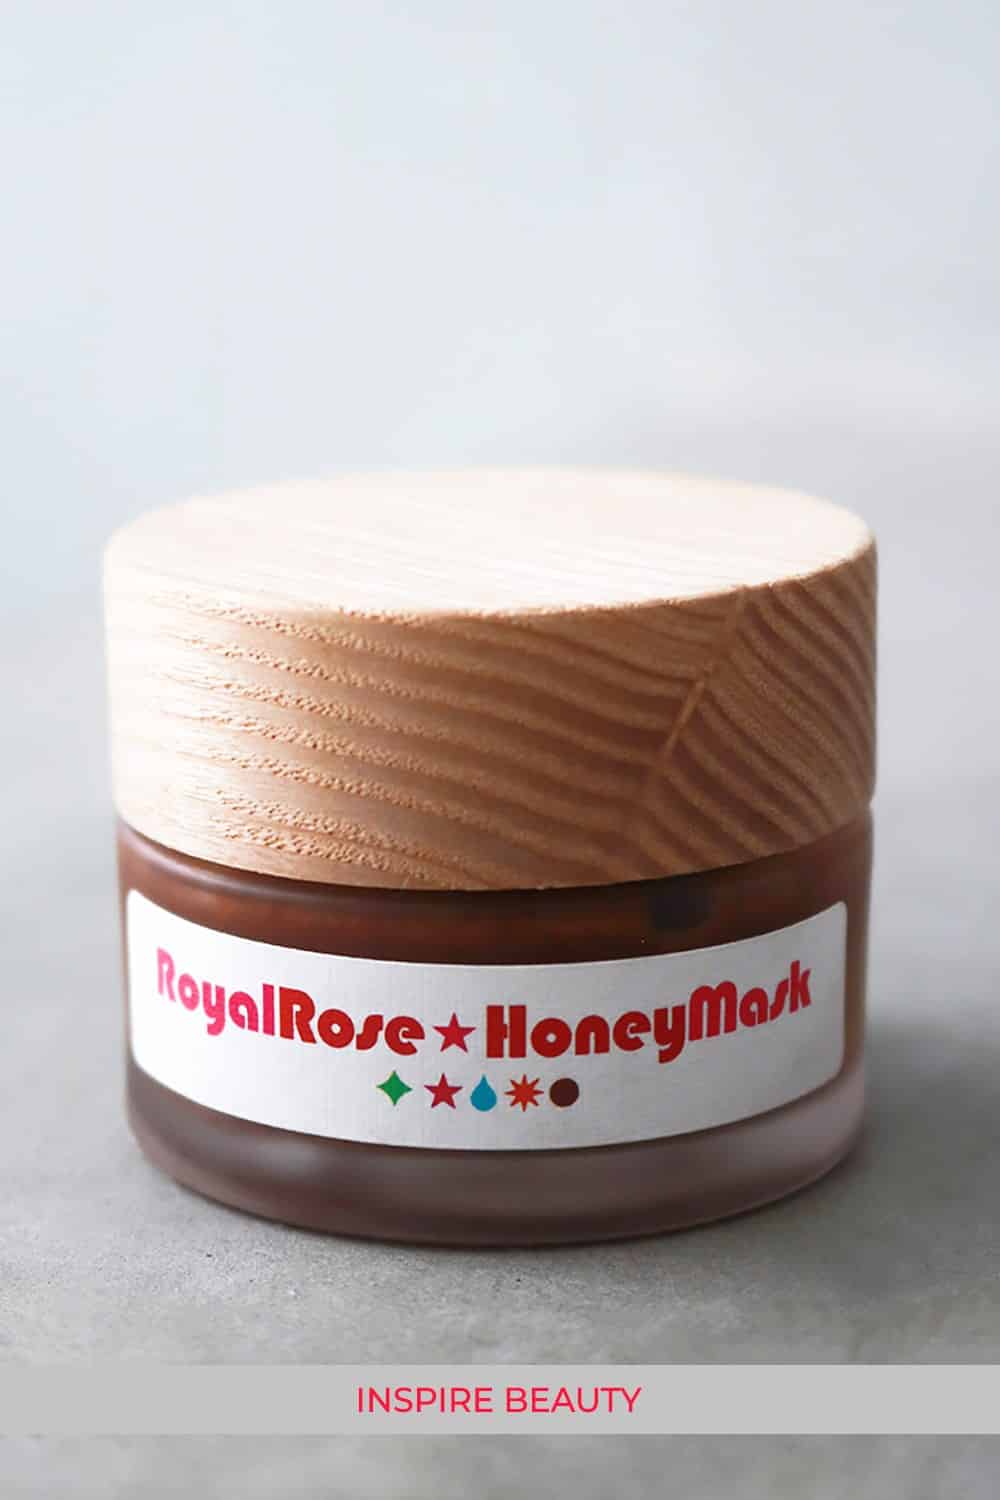 Living Libations Royal Rose Honey Mask review.